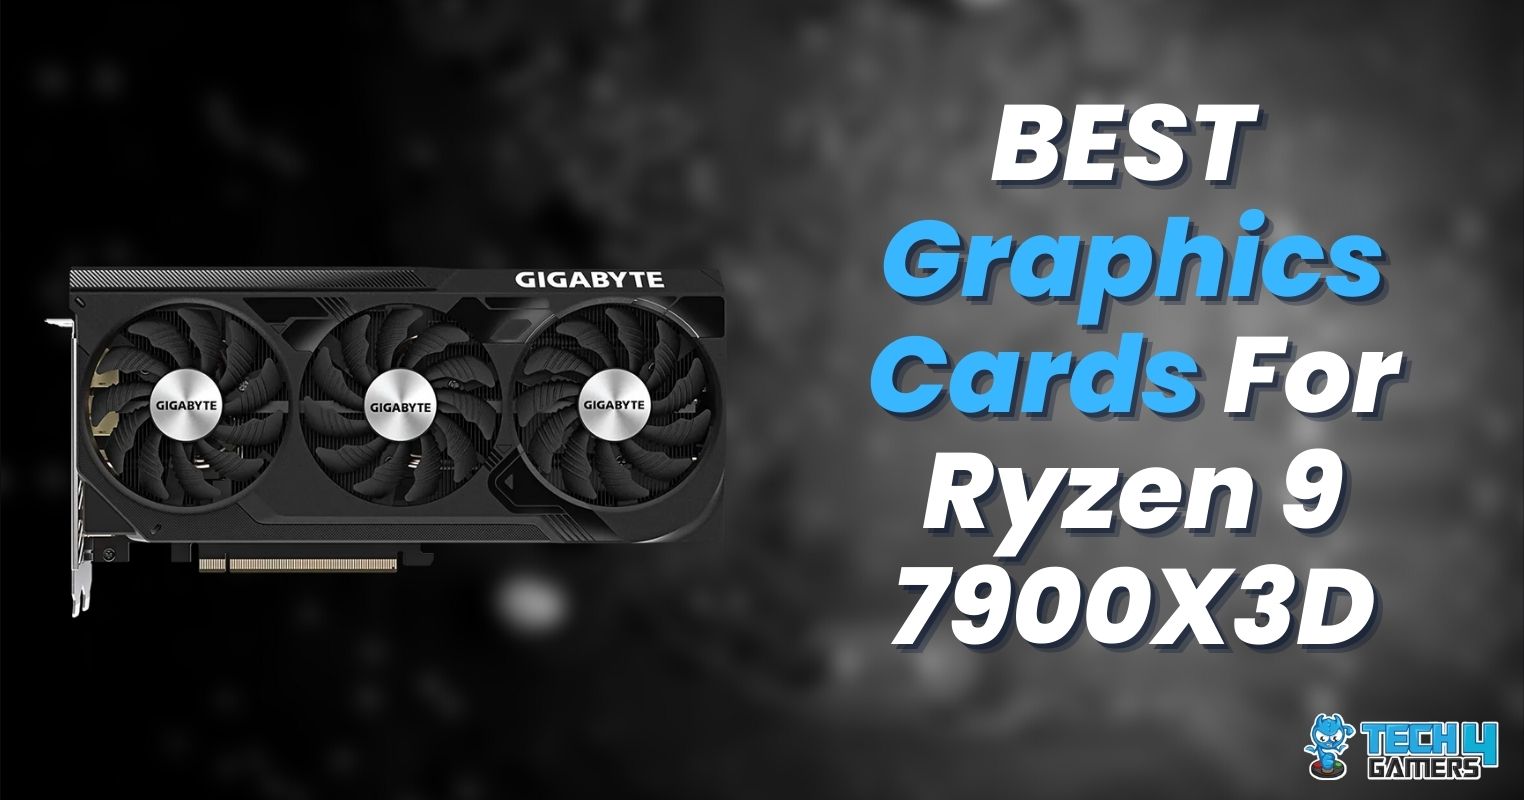 BEST GPU For Ryzen 9 7900X3D